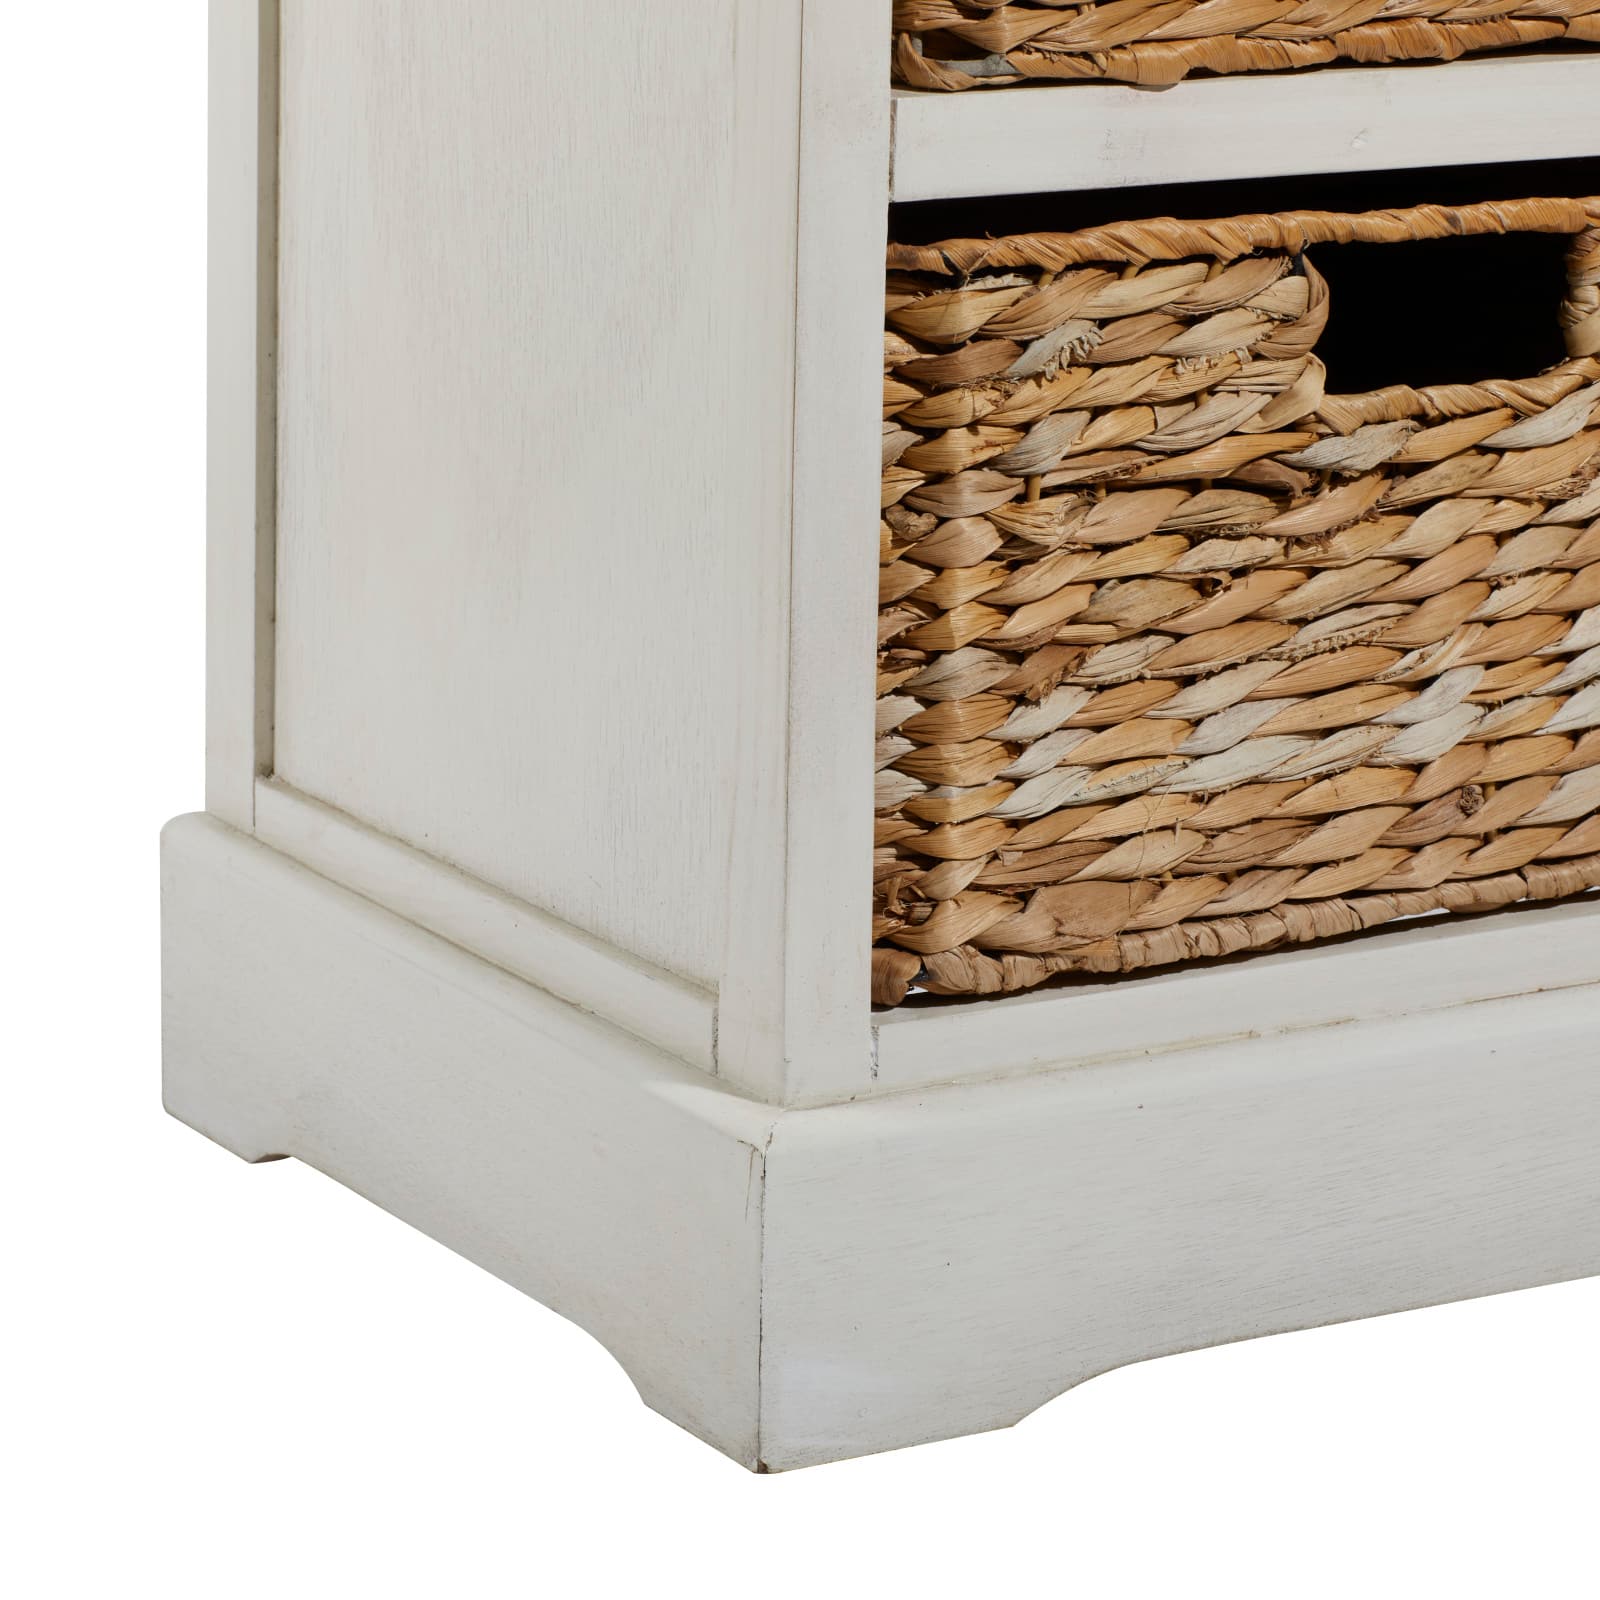 Traditional 4-Basket Storage Cabinet